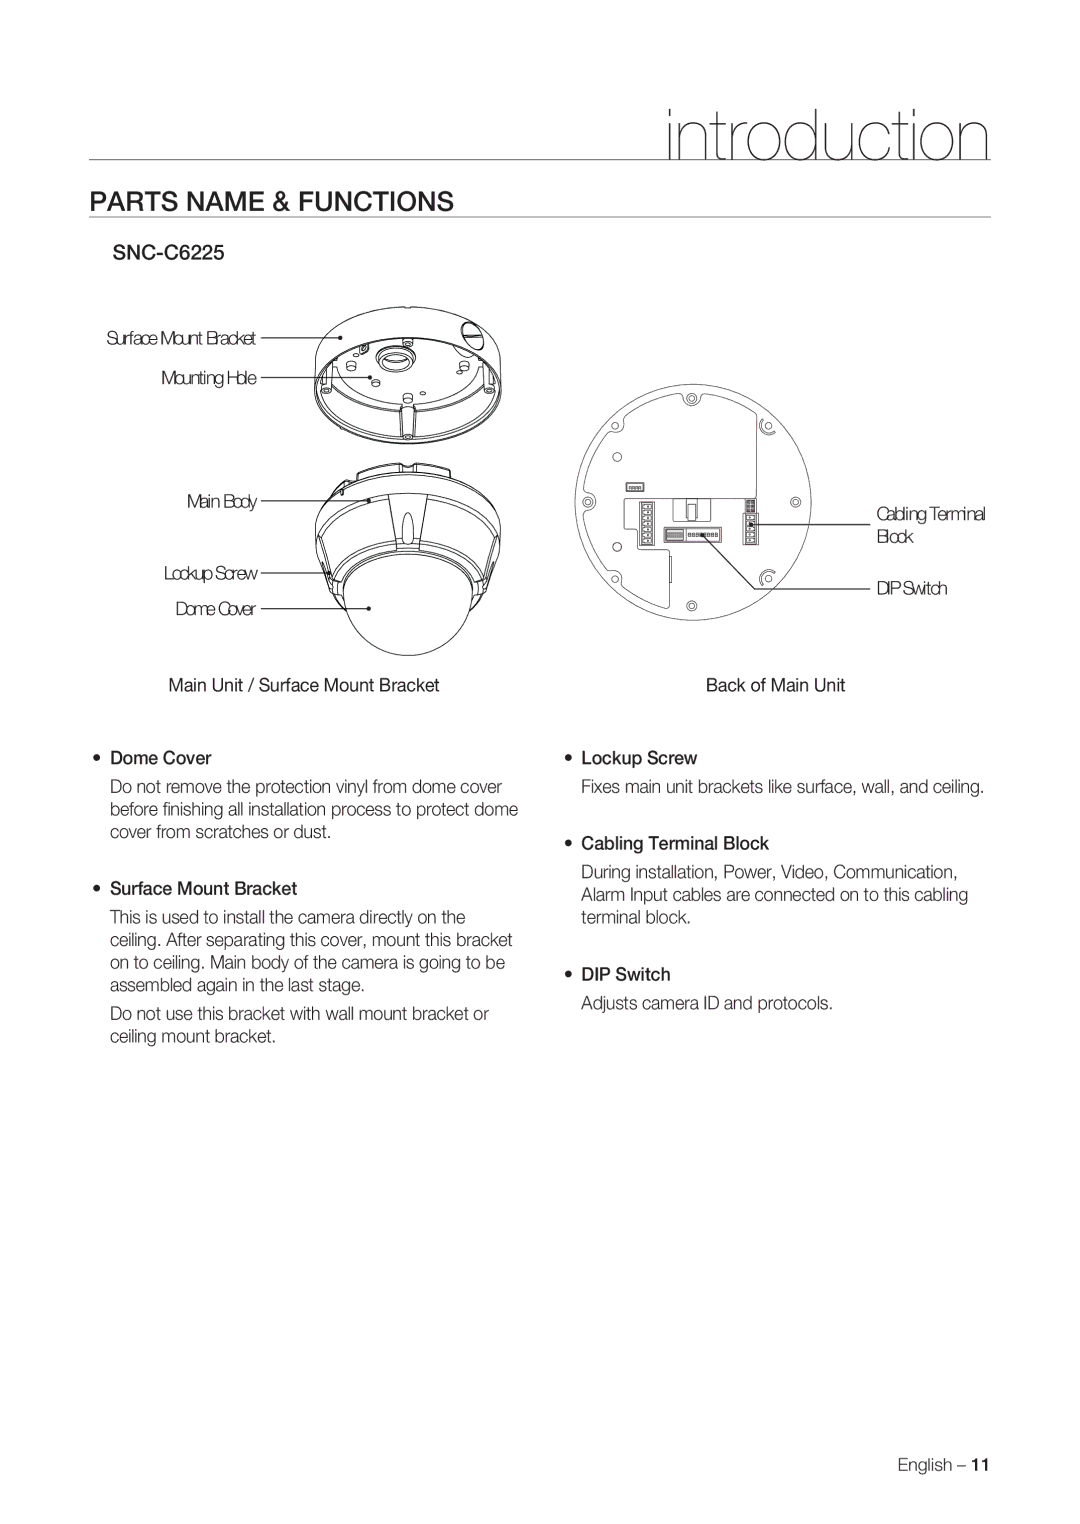 Samsung SNC-C6225, SNC-C7225 user manual Parts Name & Functions 